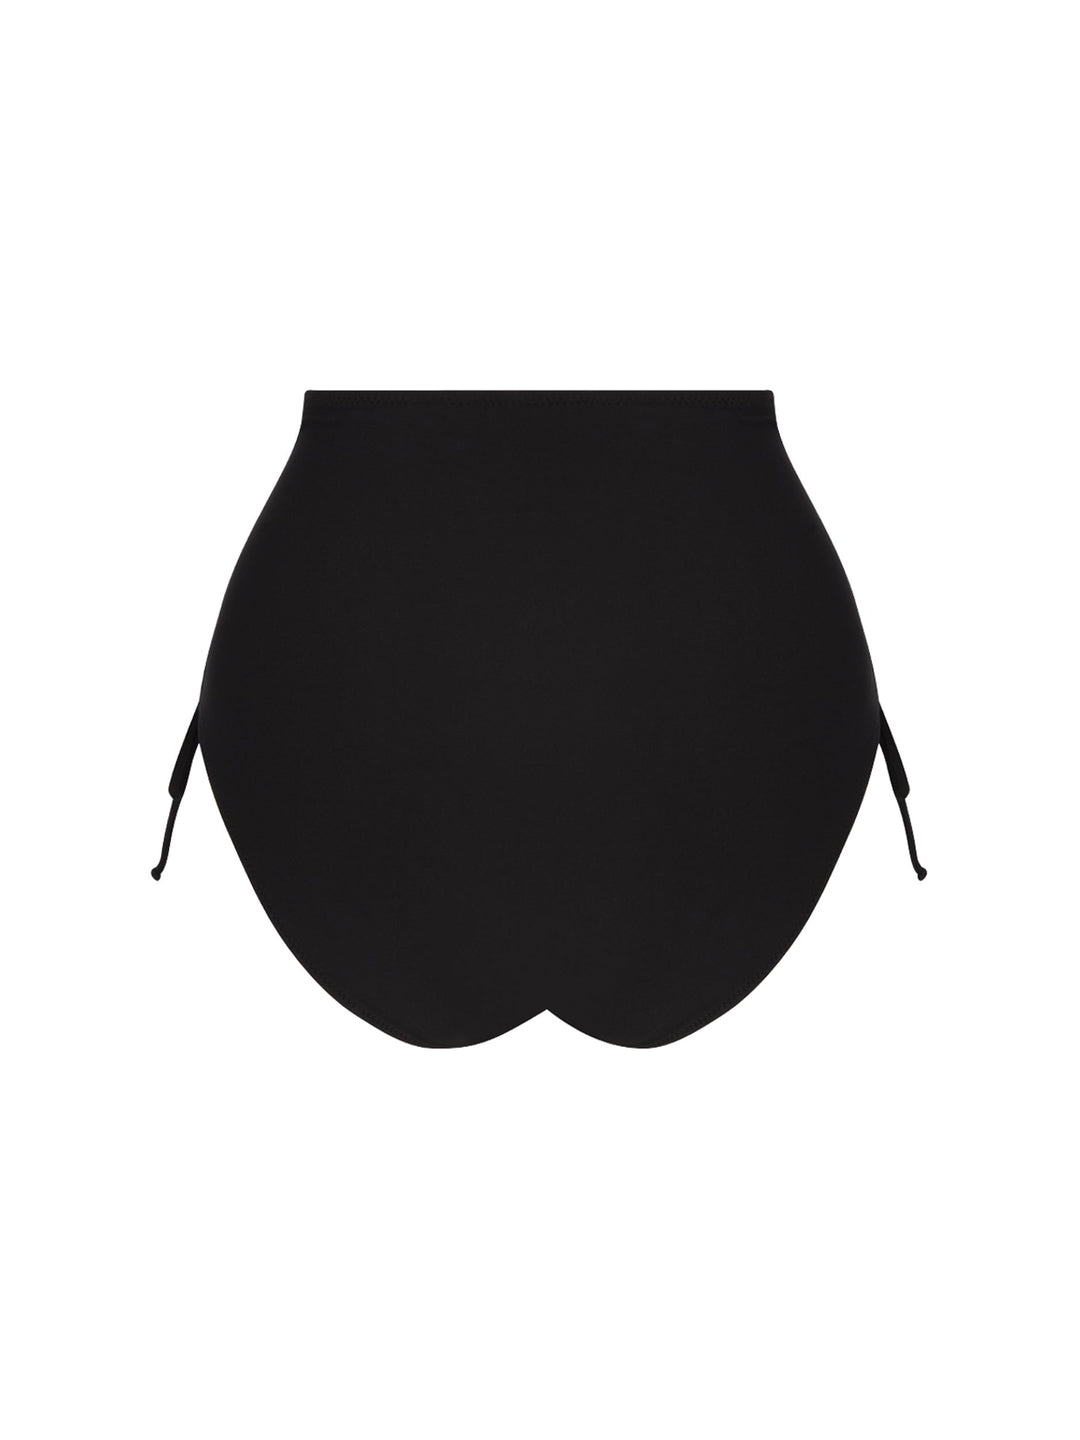 Antigel by Lise Charmel - La Chiquissima High Waist Bikini Bottom Noir Full Bikini Slip Antigel by Lise Charmel Swimwear